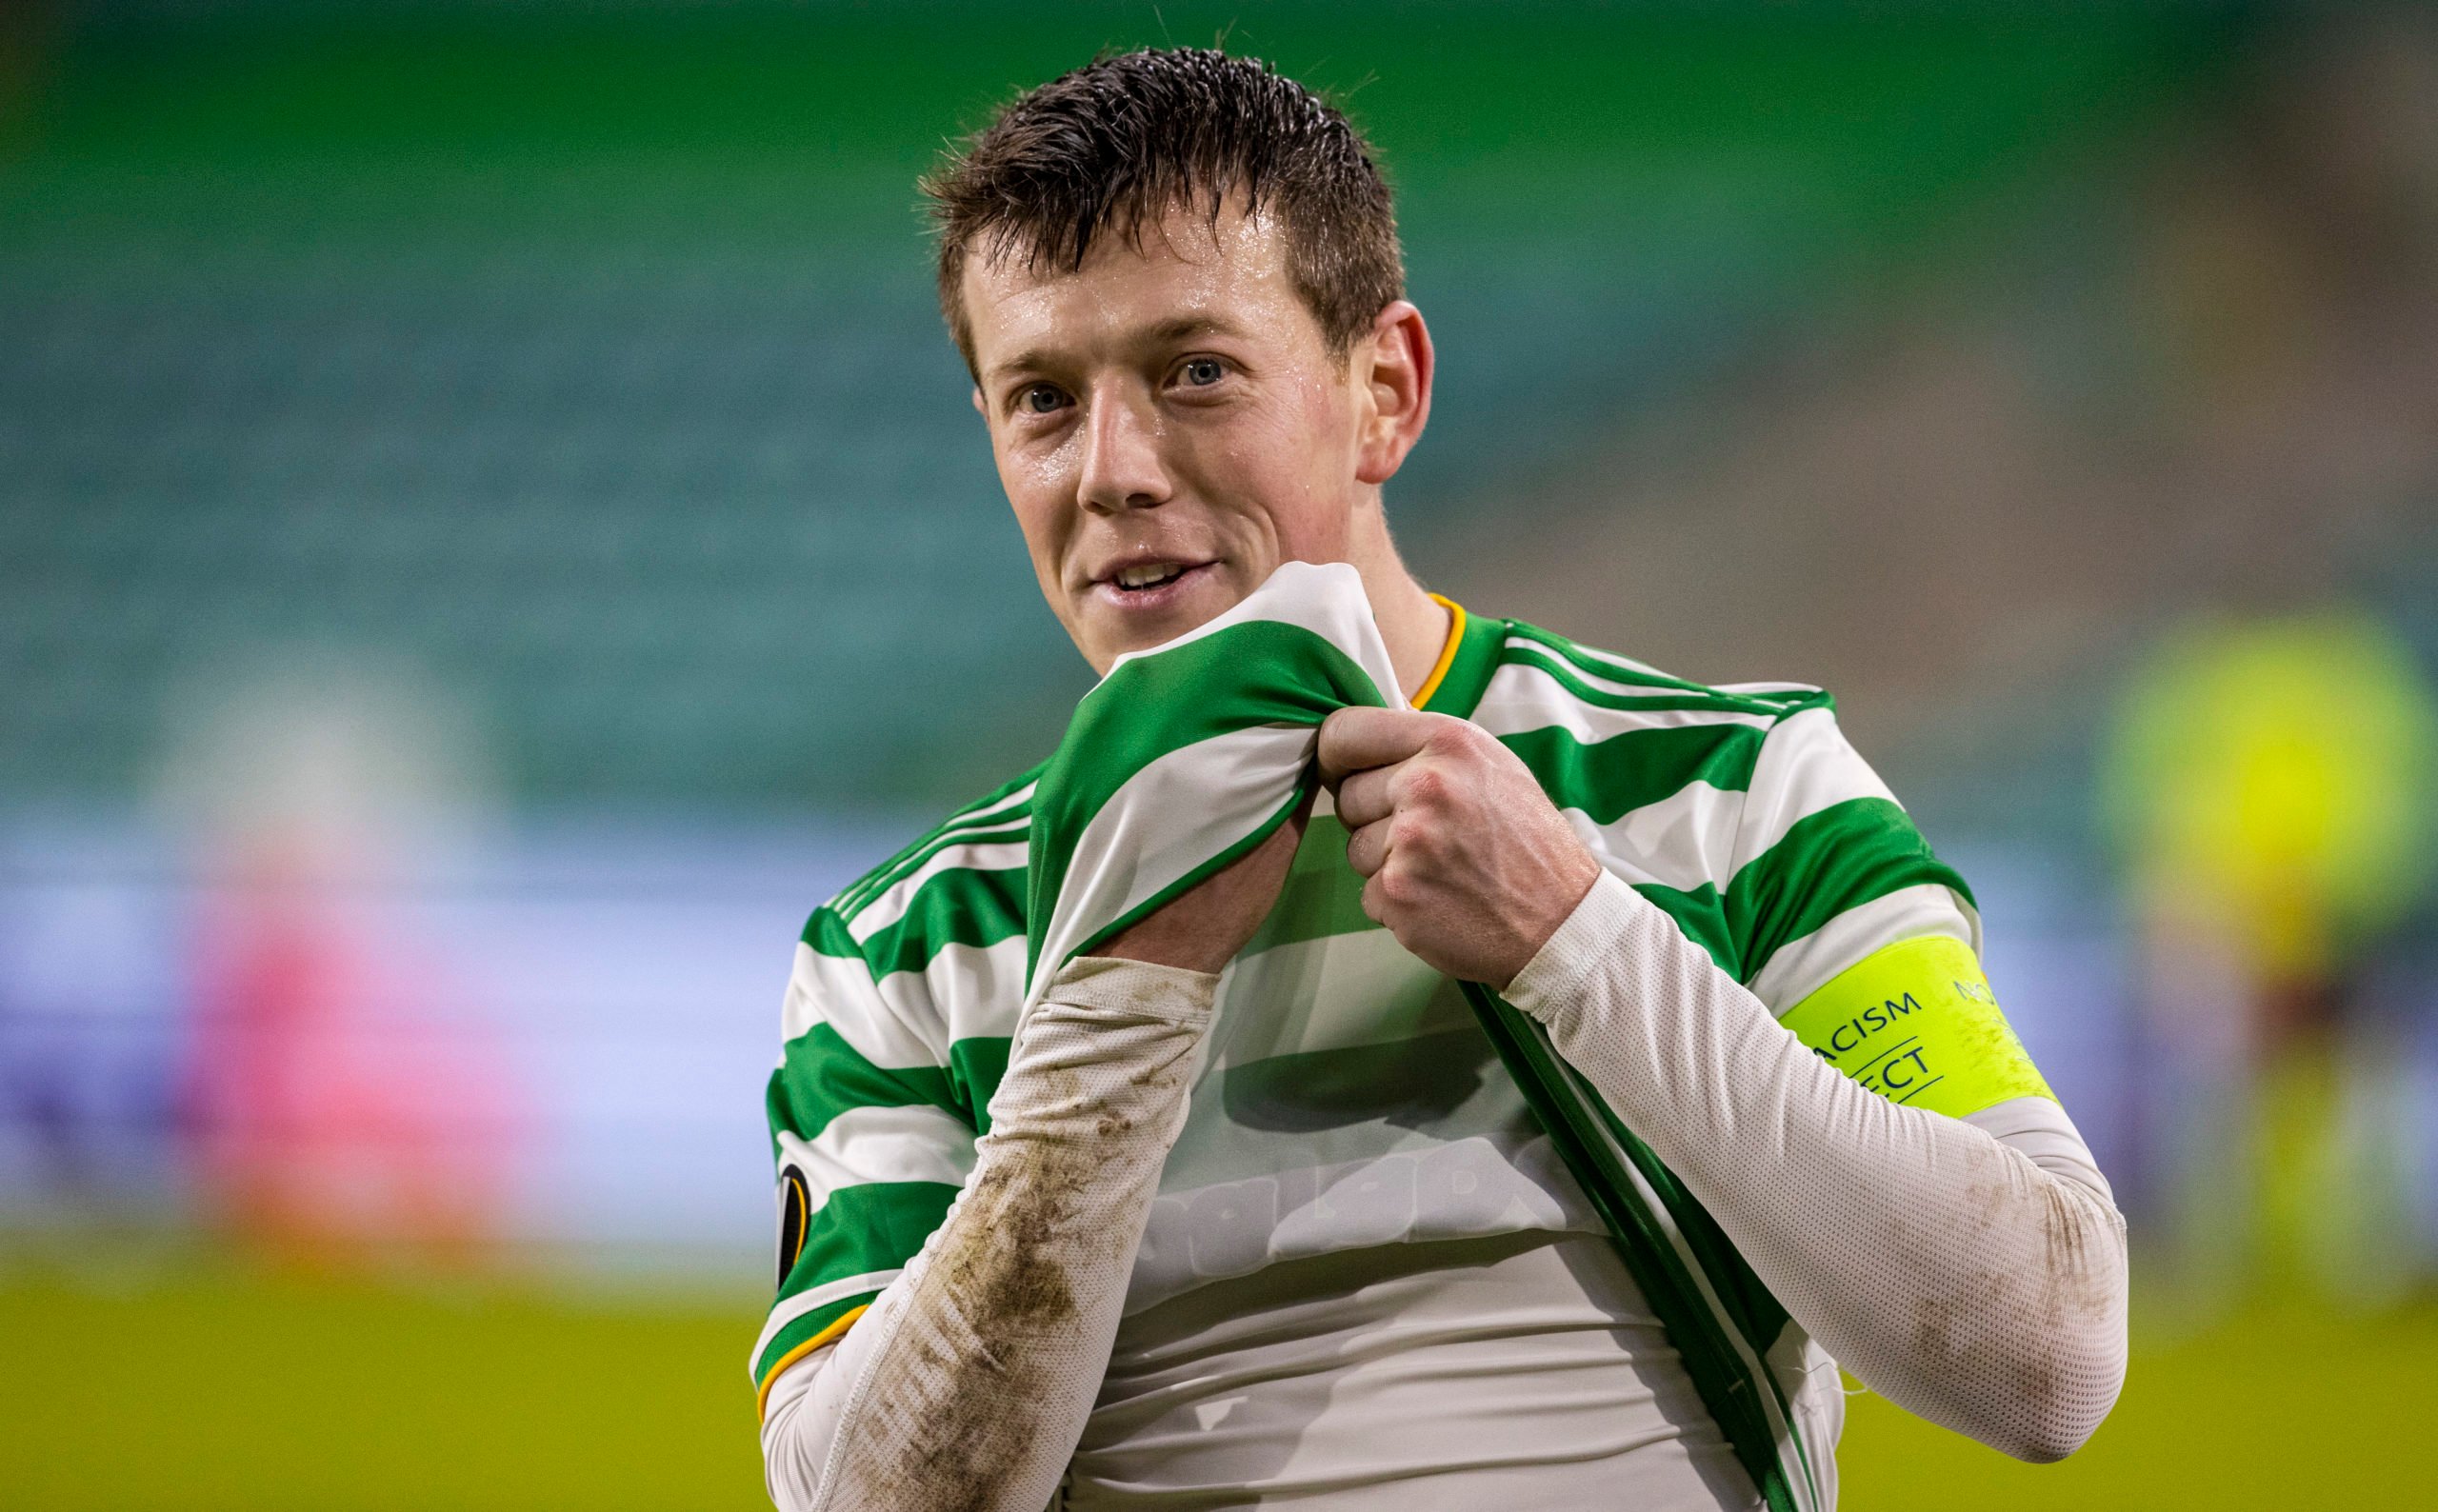 "Elite" Callum McGregor is setting the standard for Celtic at Lennoxtown